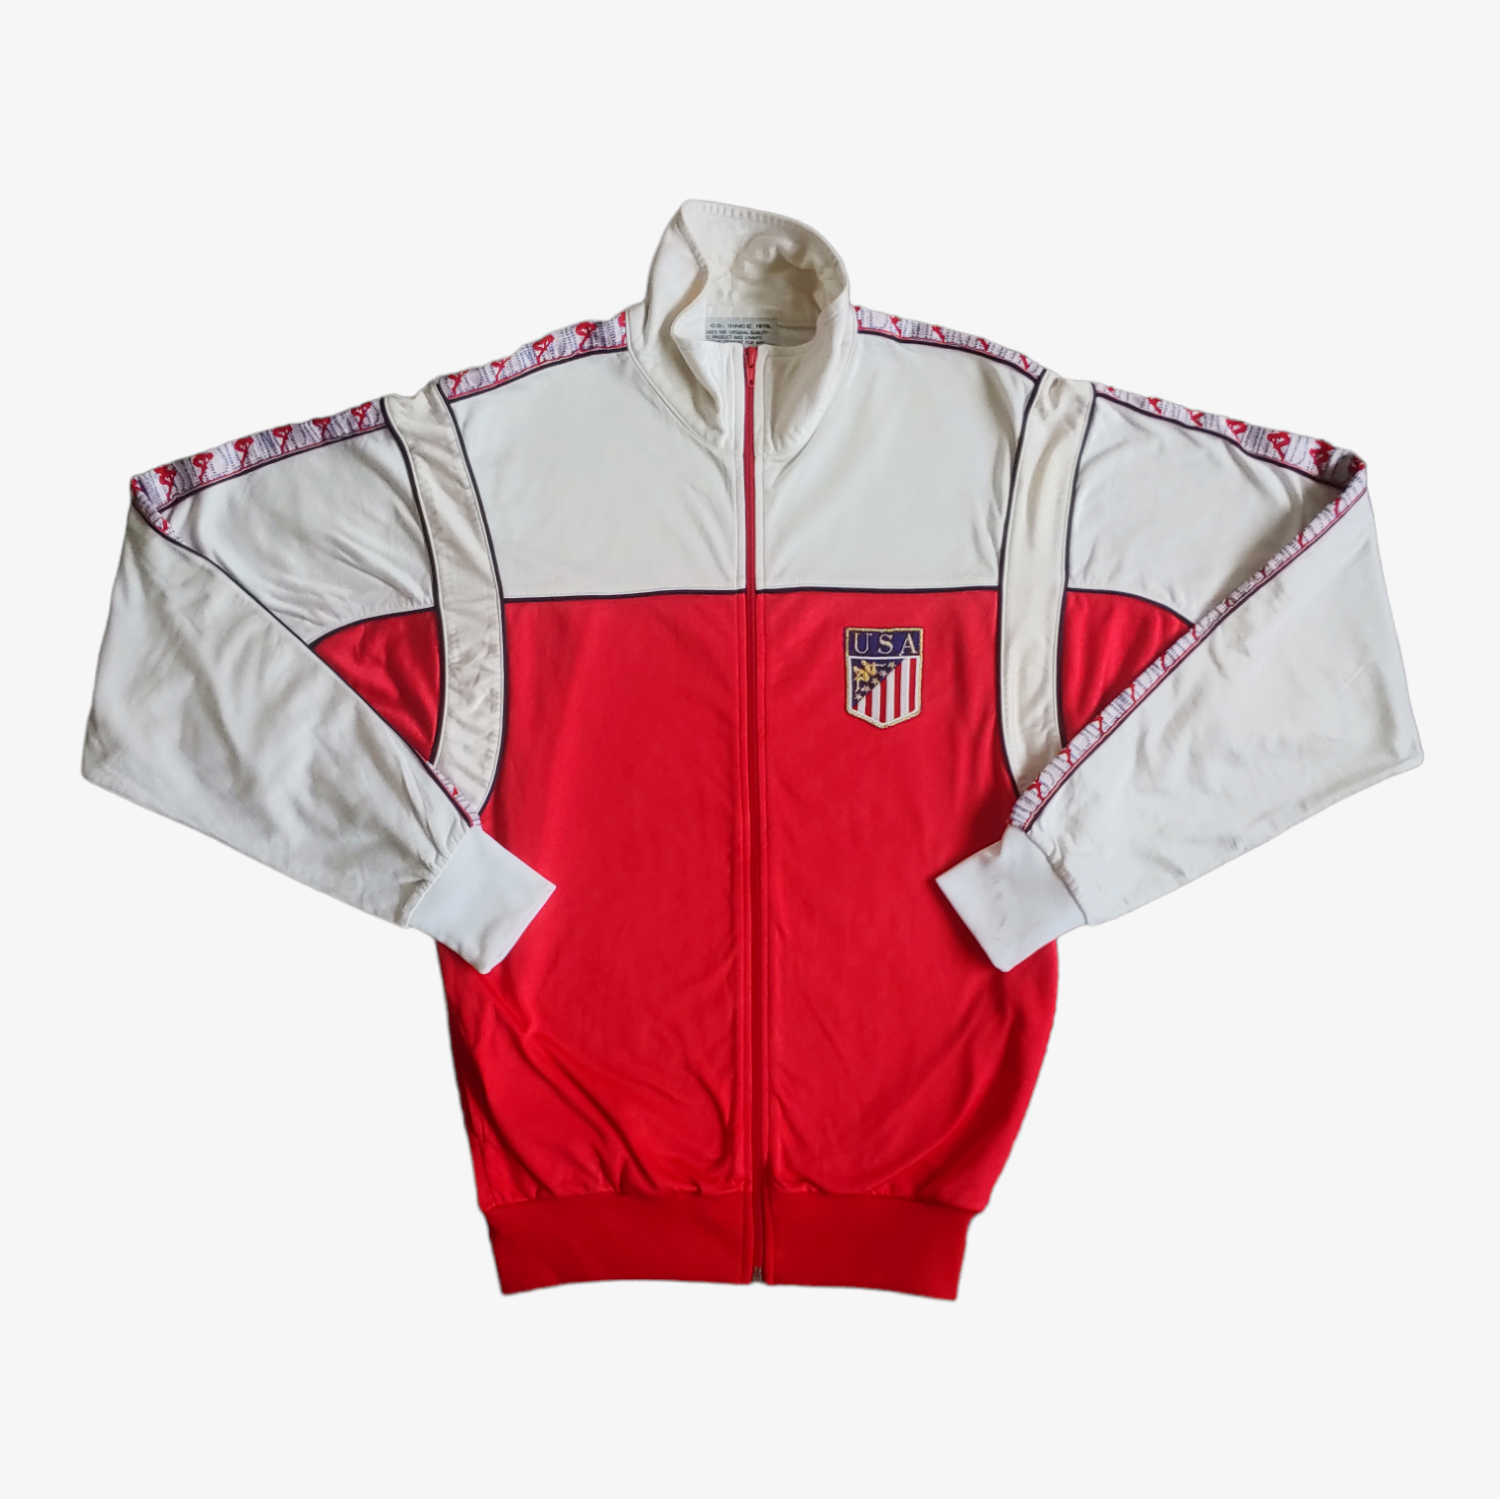 Vintage 80s Kappa 1988 USA Olympic Team Track Jacket - Casspios Dream